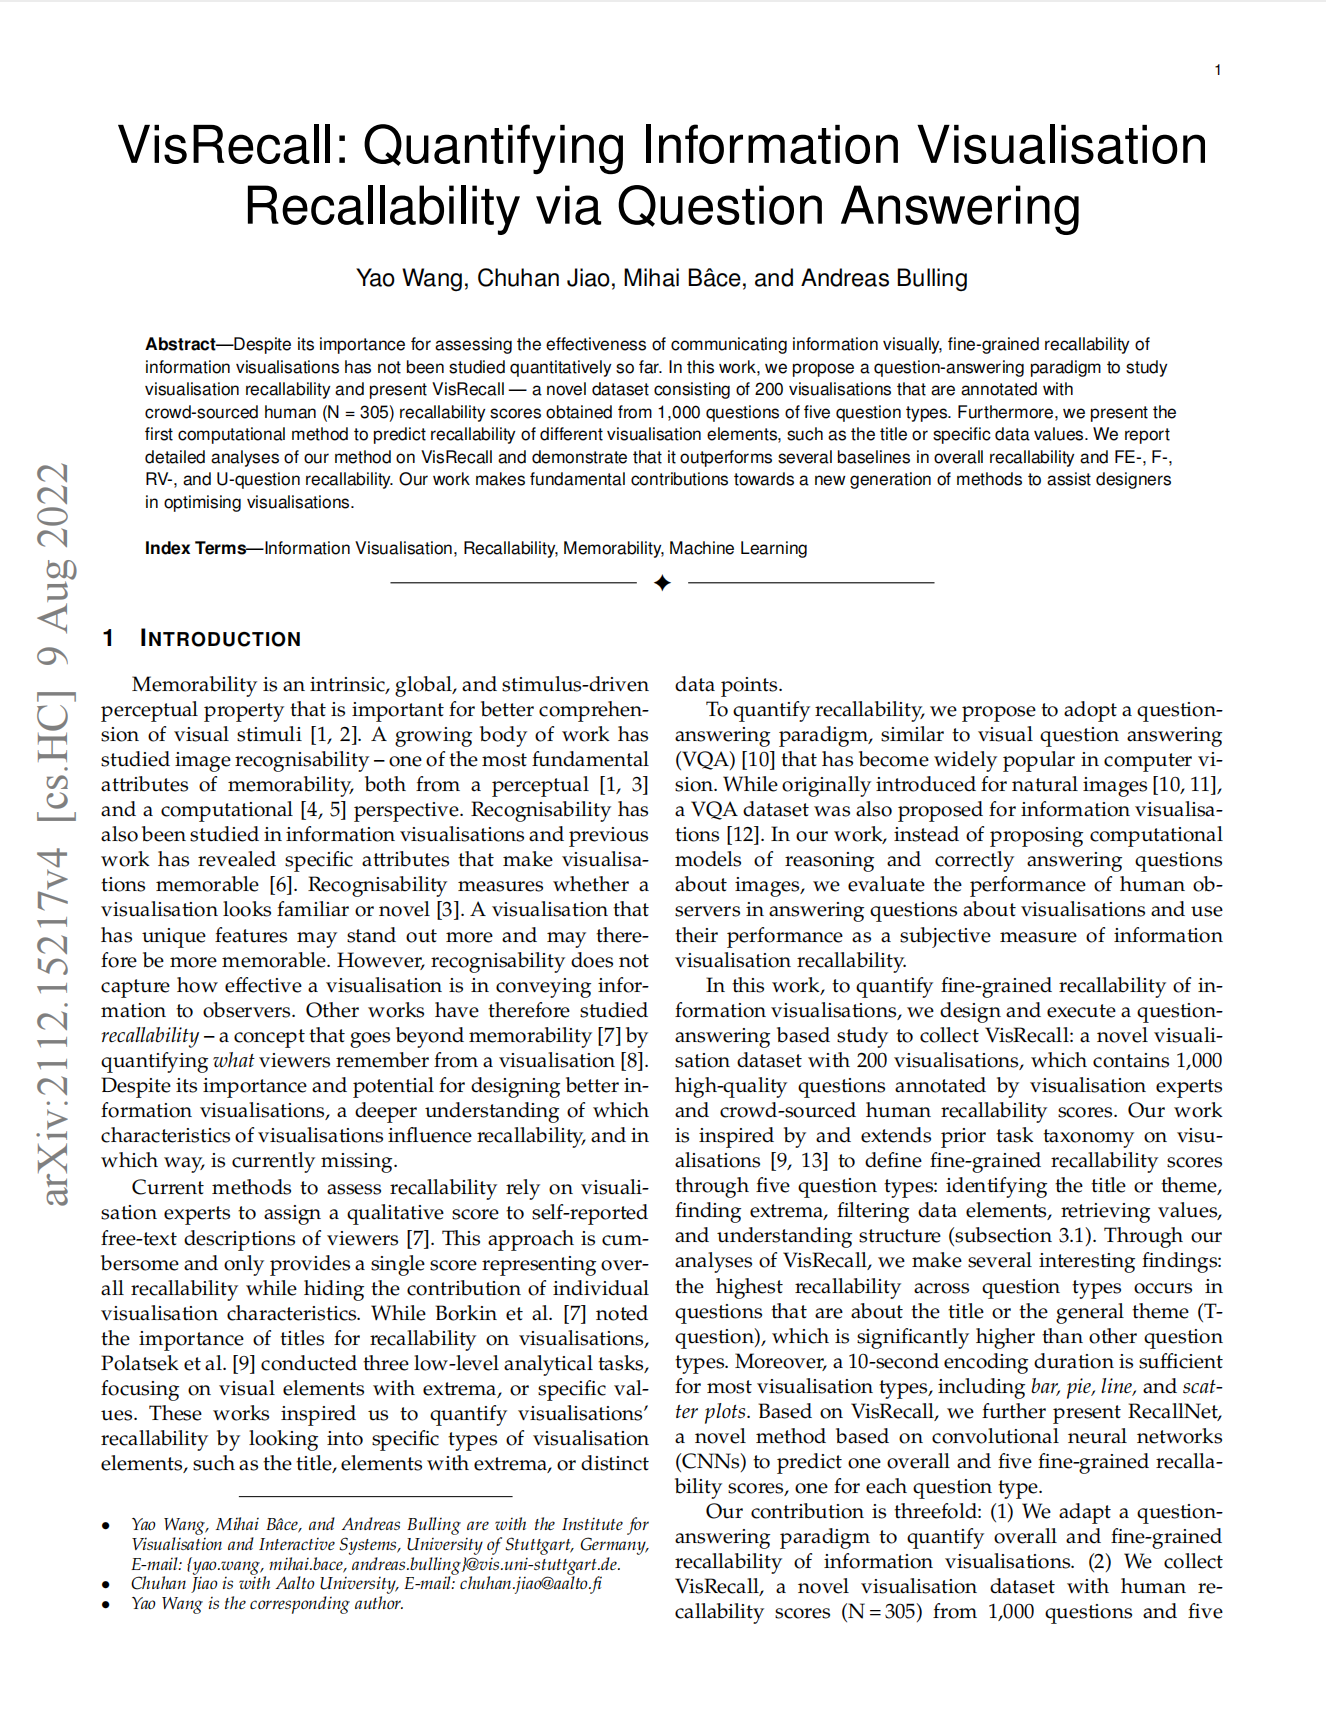 VisRecall: Quantifying Information Visualisation Recallability via Question Answering